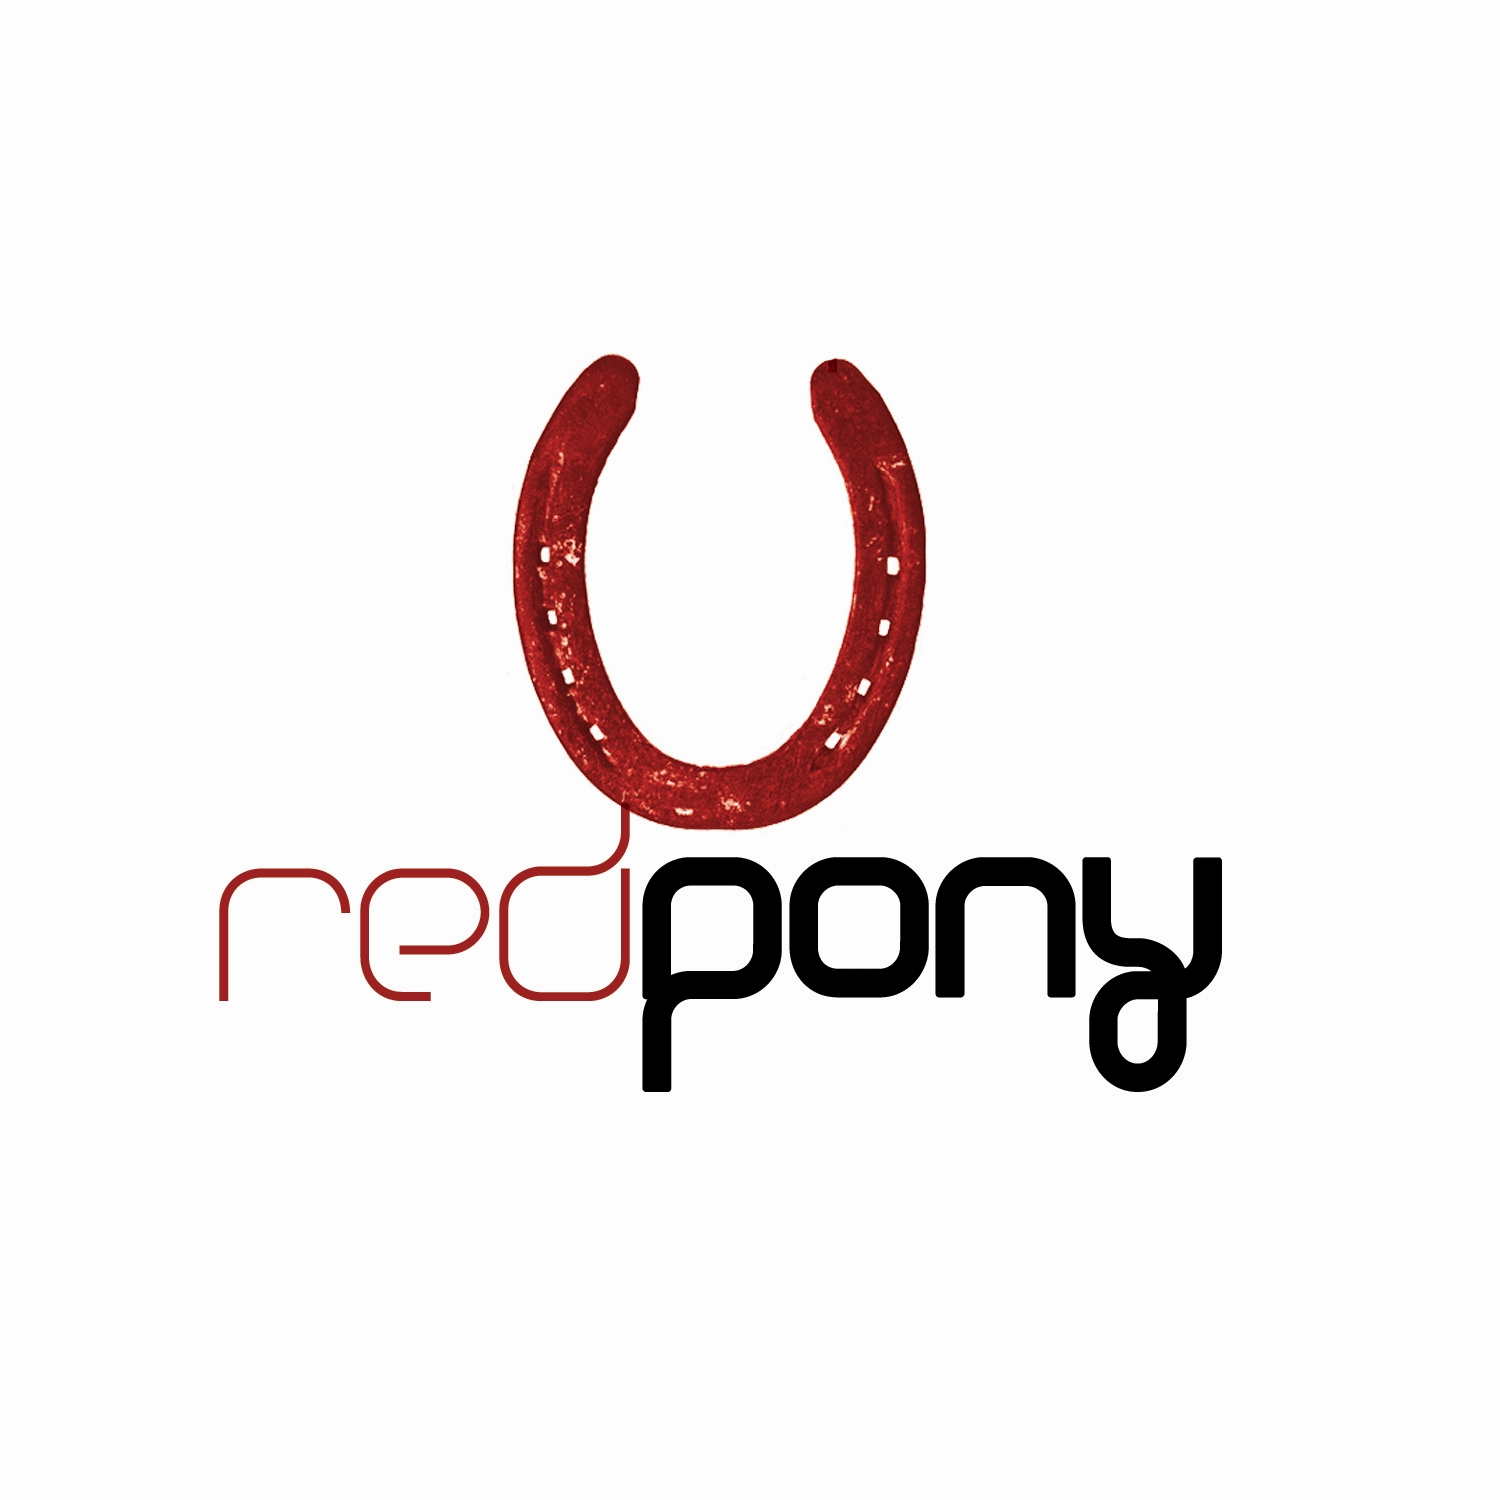 Red Horseshoe Logos